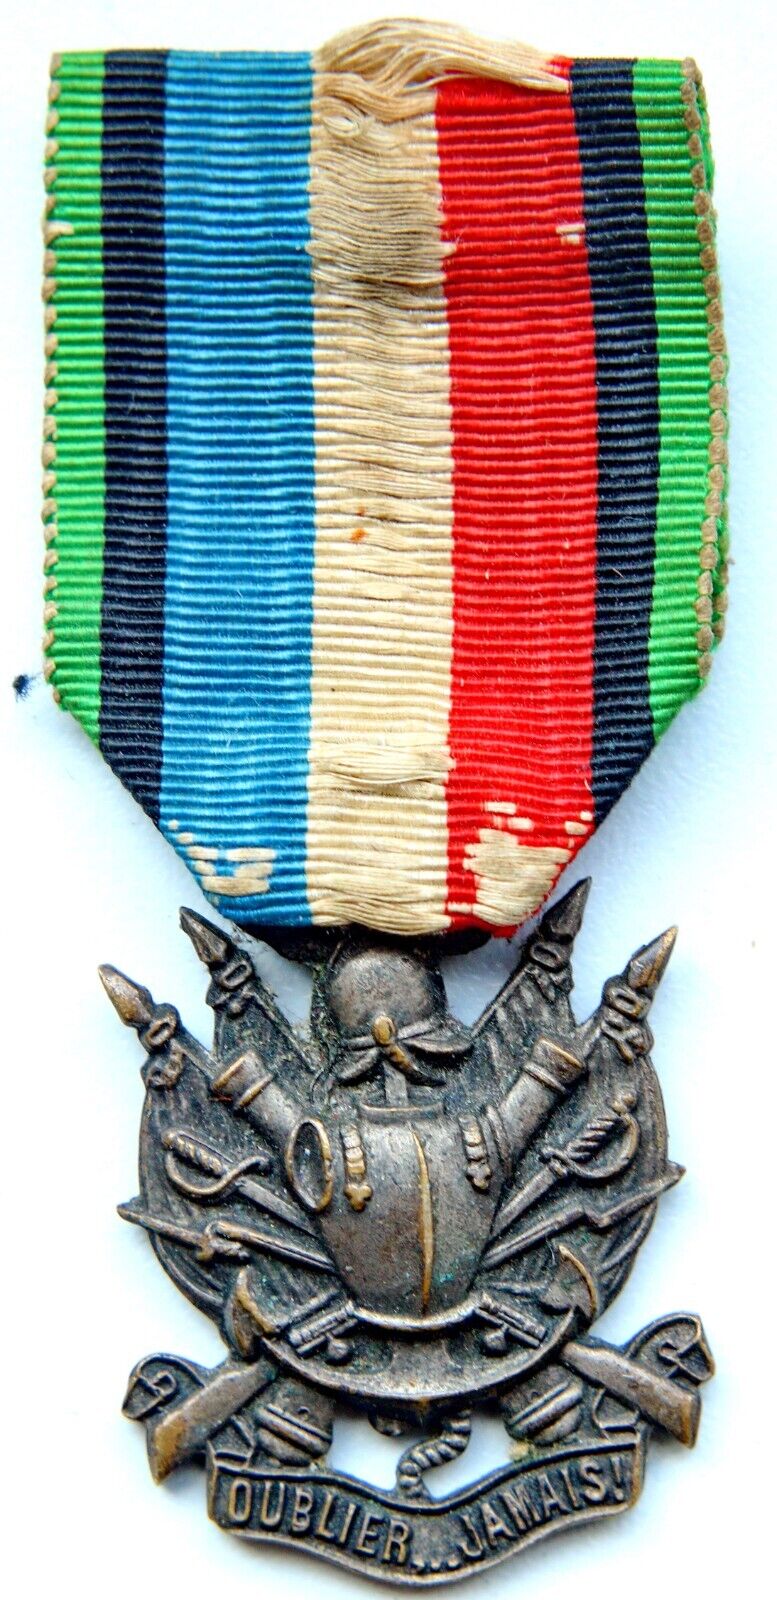 France Napoleonic Wars Franco Prussian War Veterans Medal (1870-1871)